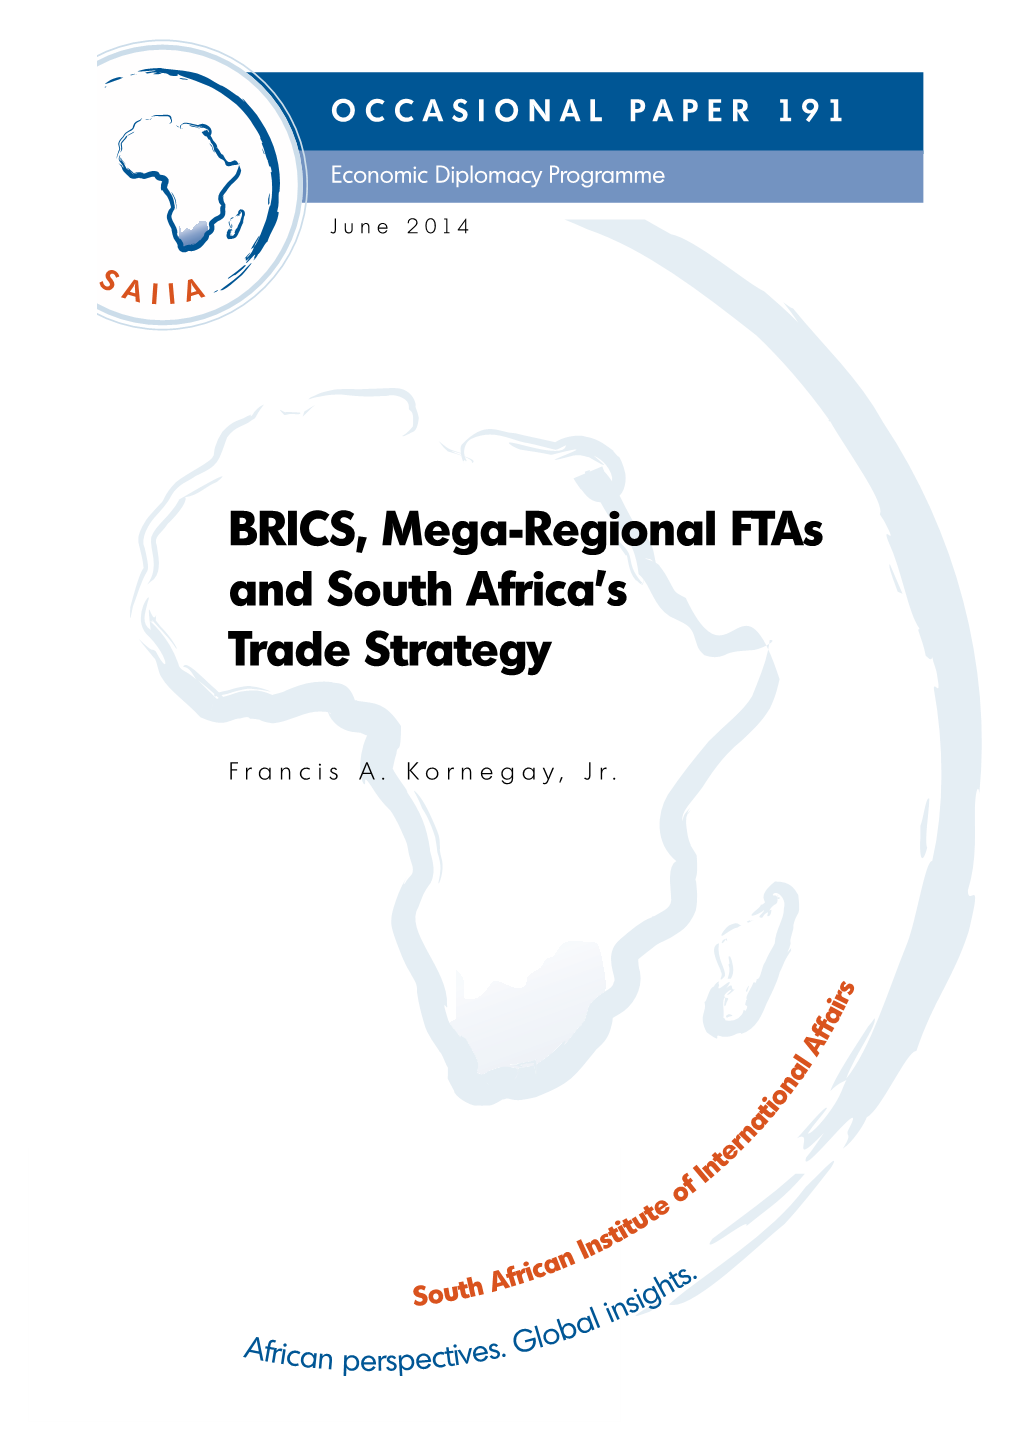 BRICS, Mega-Regional Ftas and South Africa's Trade Strategy